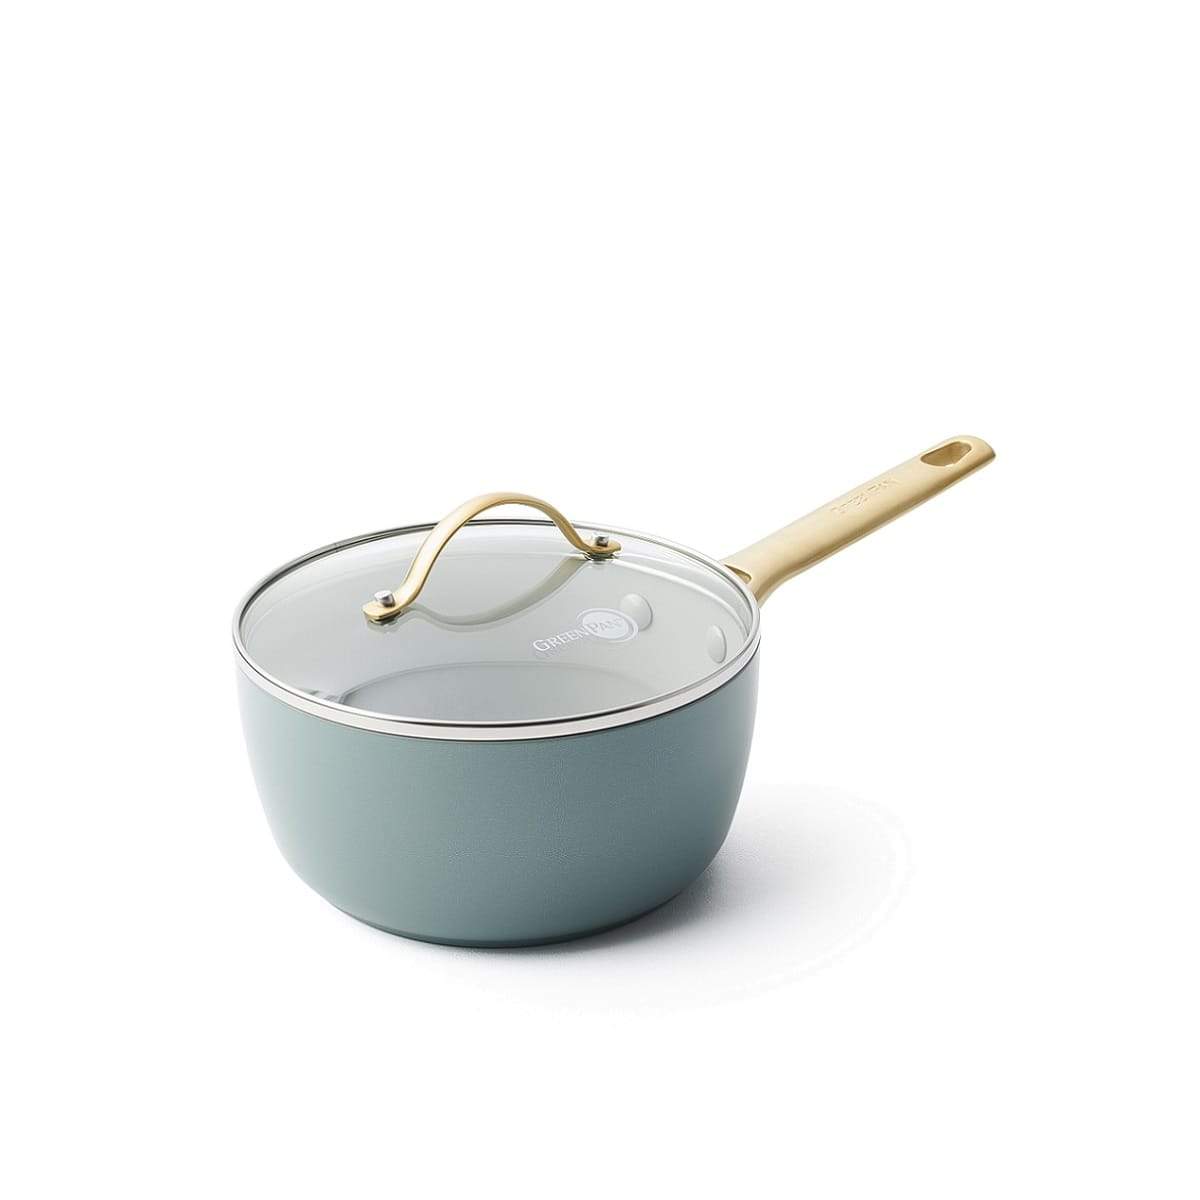 CC003717-001 - Padova Saucepan with Lid, Smokey Sky Blue - 18cm - Product Image 1